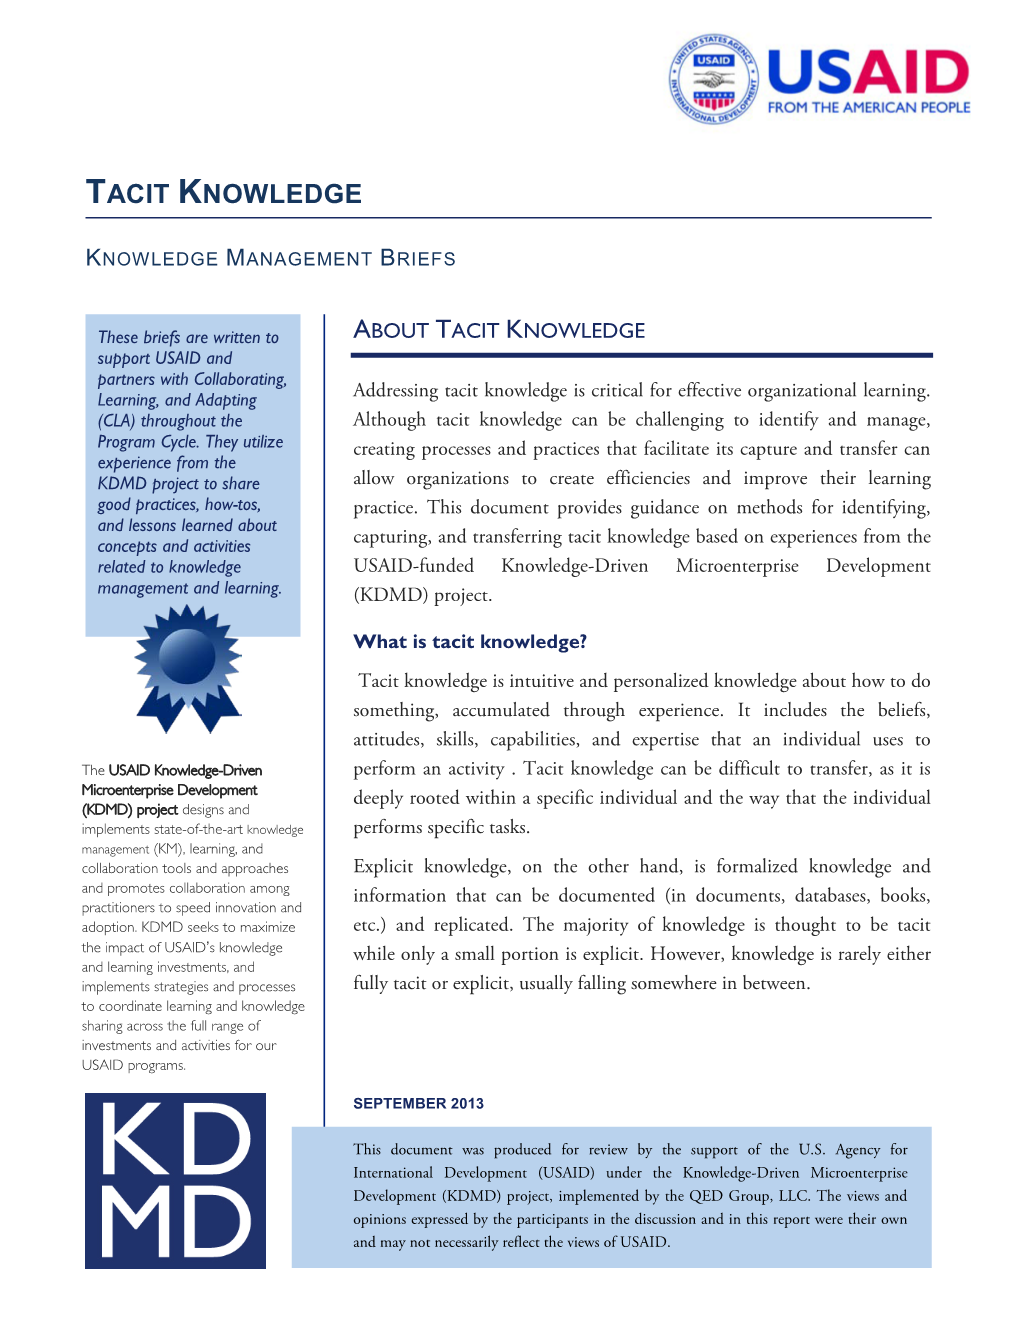 Tacit Knowledge: Knowledge Management Briefs